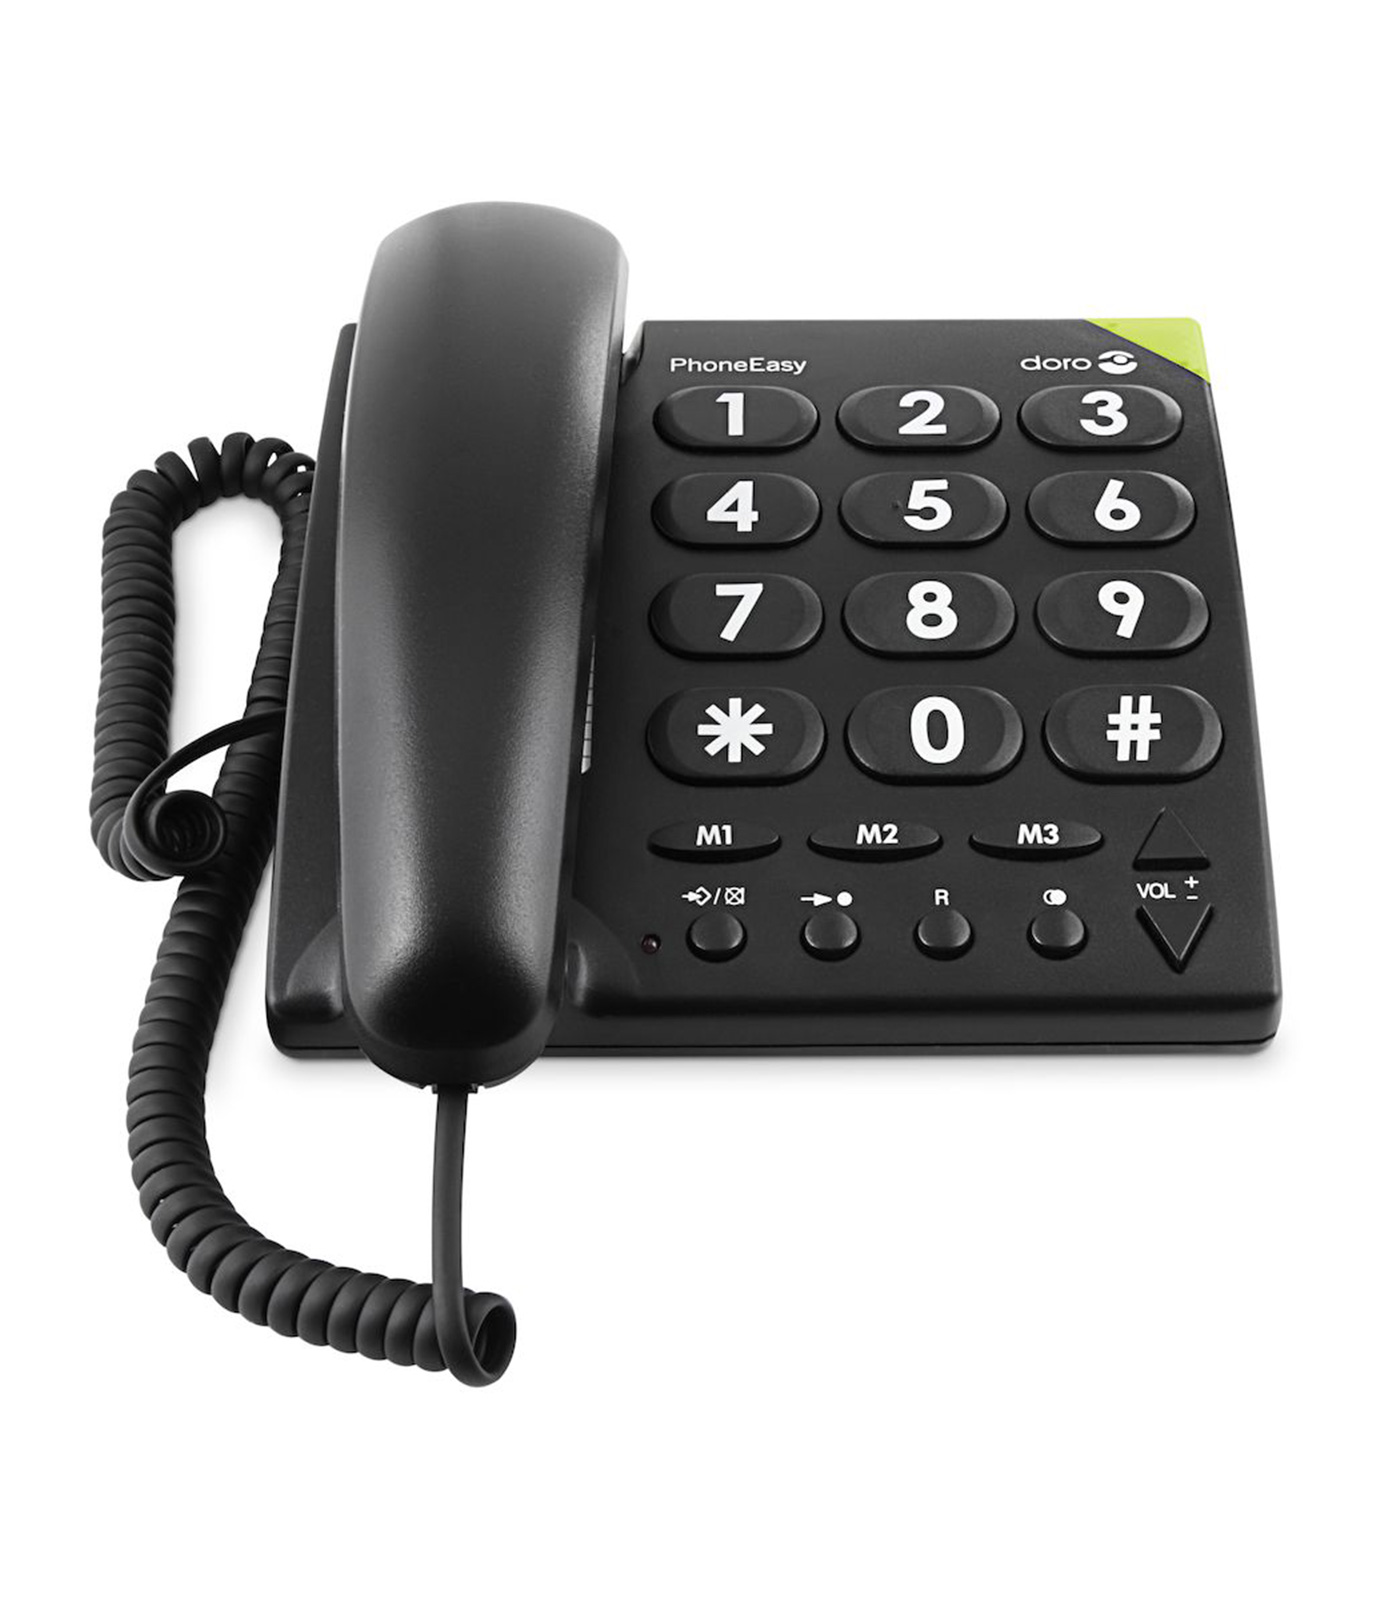 DORO PhoneEasy 311c schwarz Telefon/Großstasten